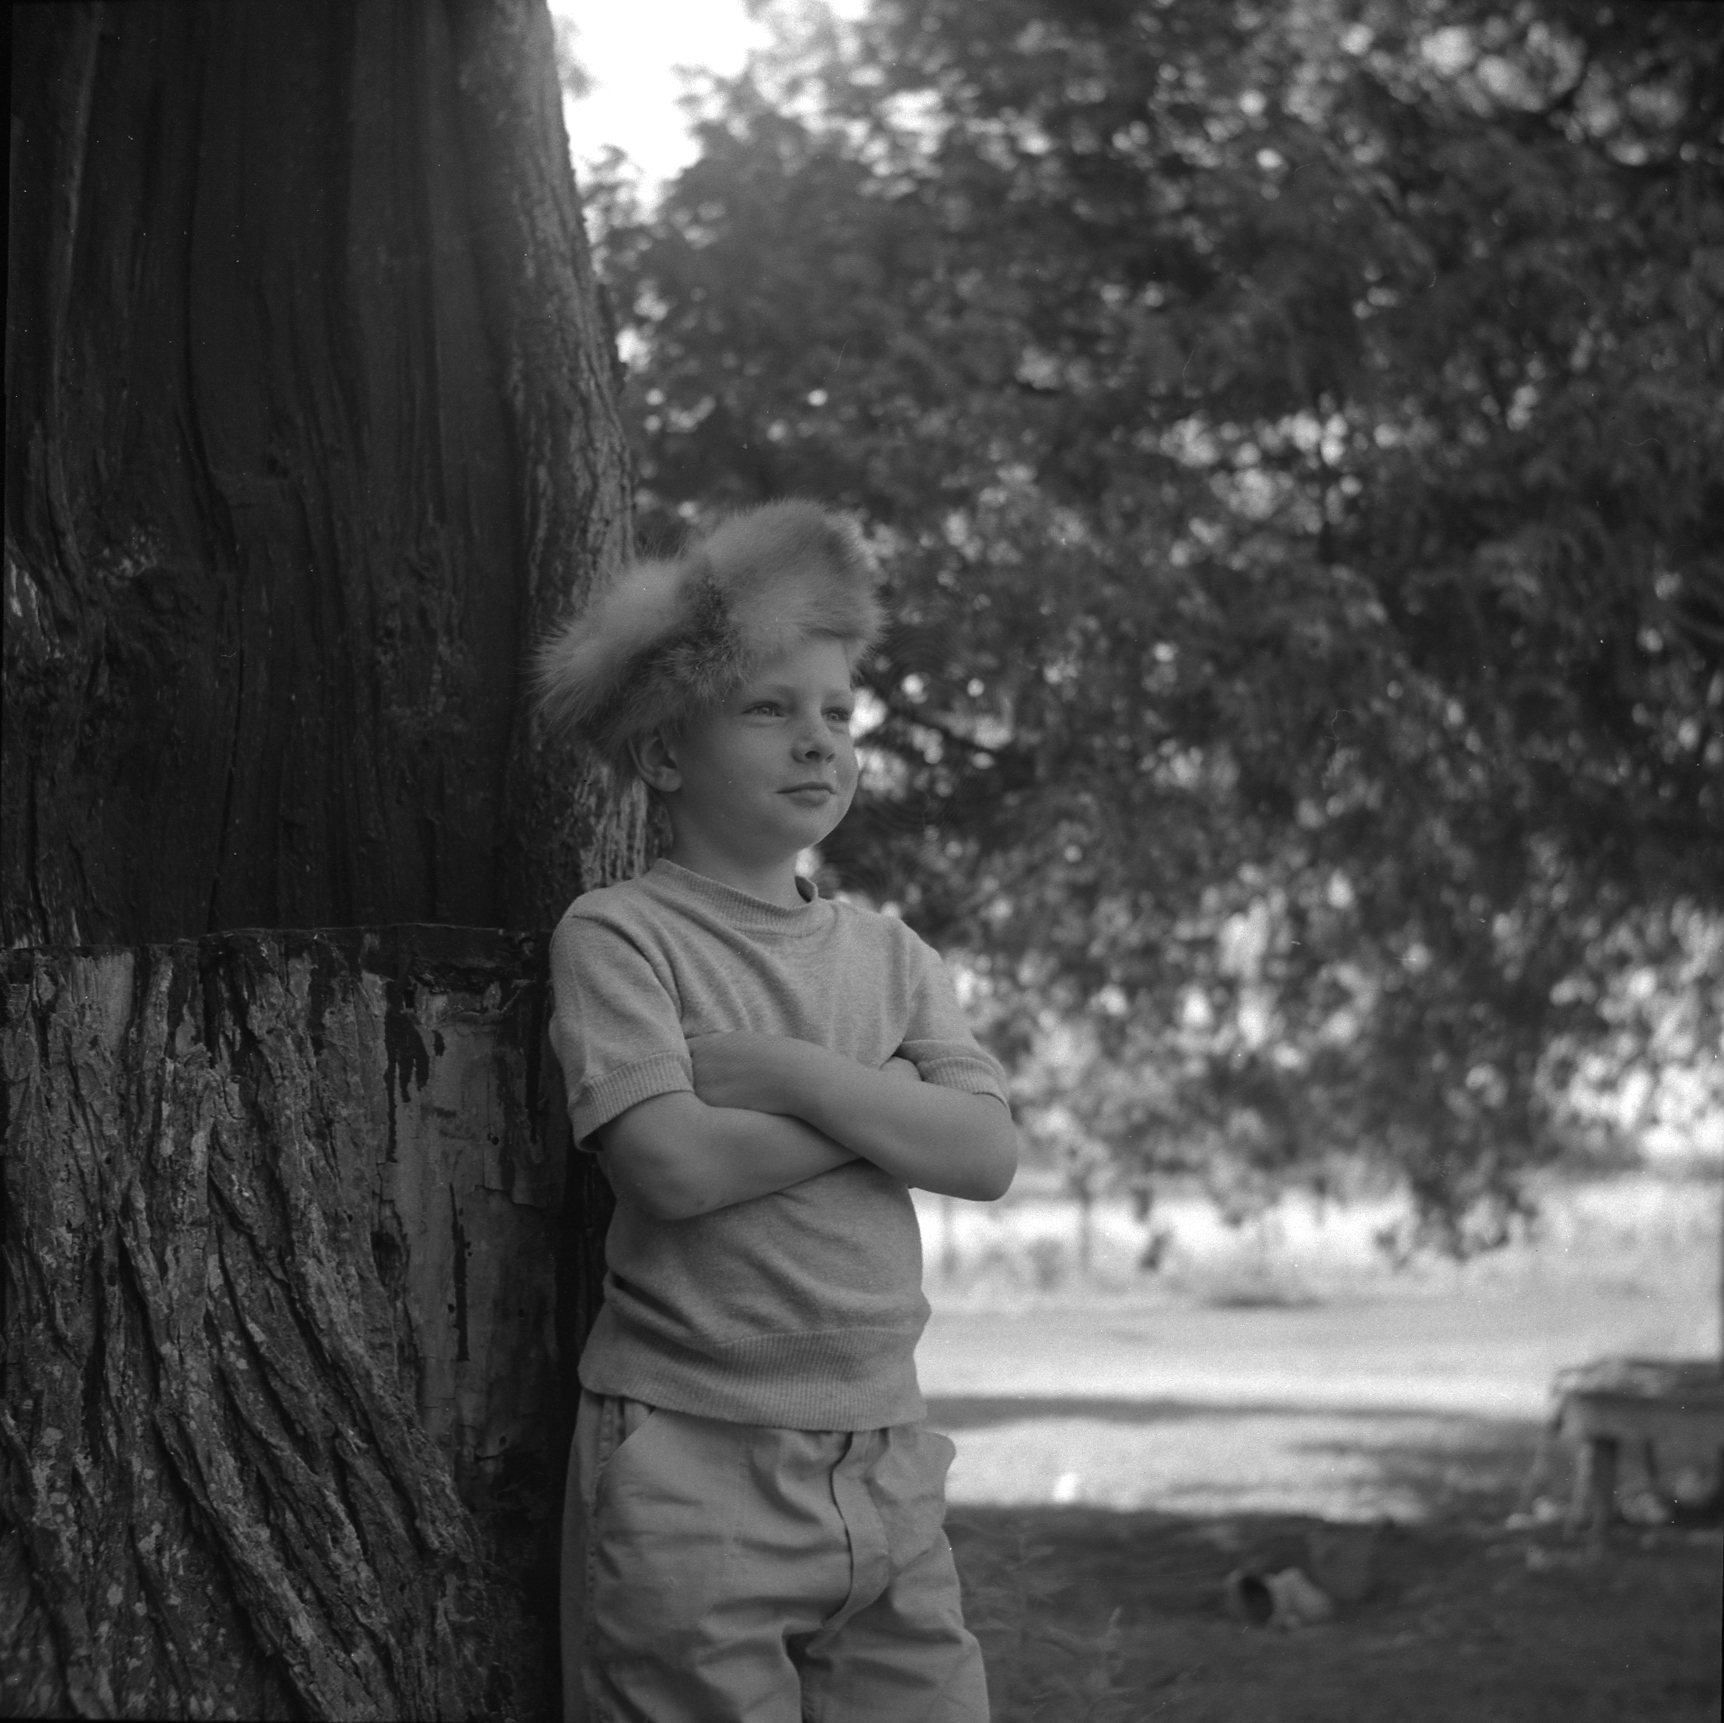 David Gruber, 1955. Photograph by Sylvia Schwartz. OJA, fonds 80